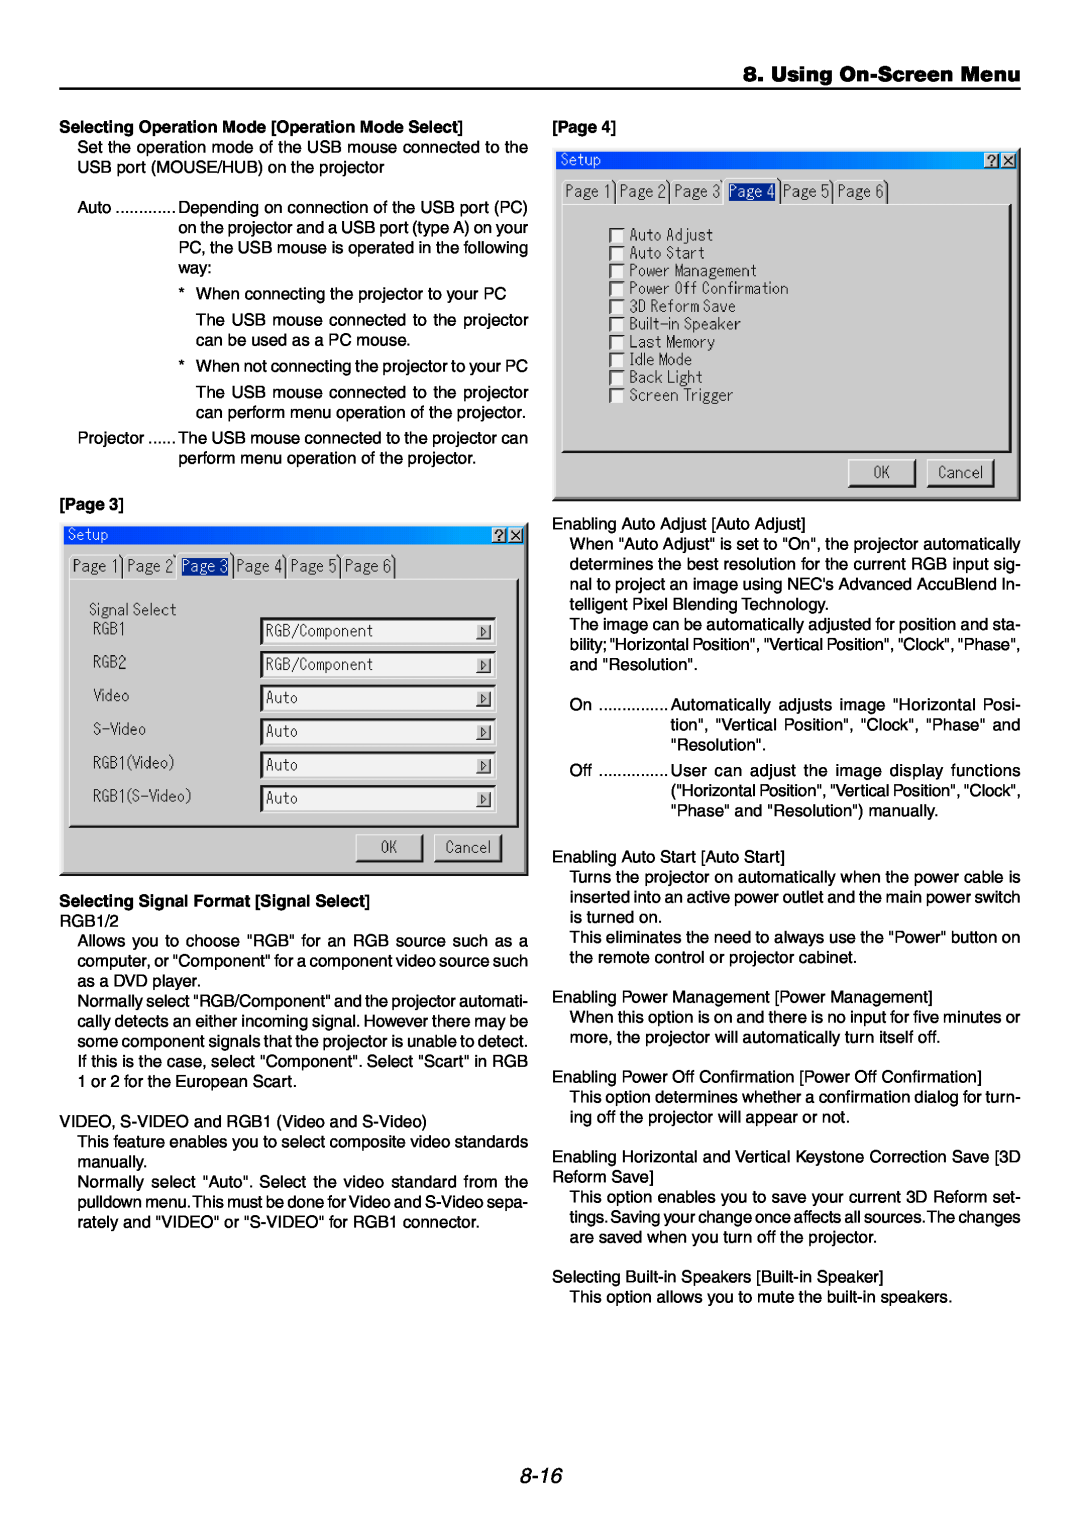 NEC GT6000 user manual Using On-ScreenMenu, 8-16, Selecting Operation Mode Operation Mode Select, Page 